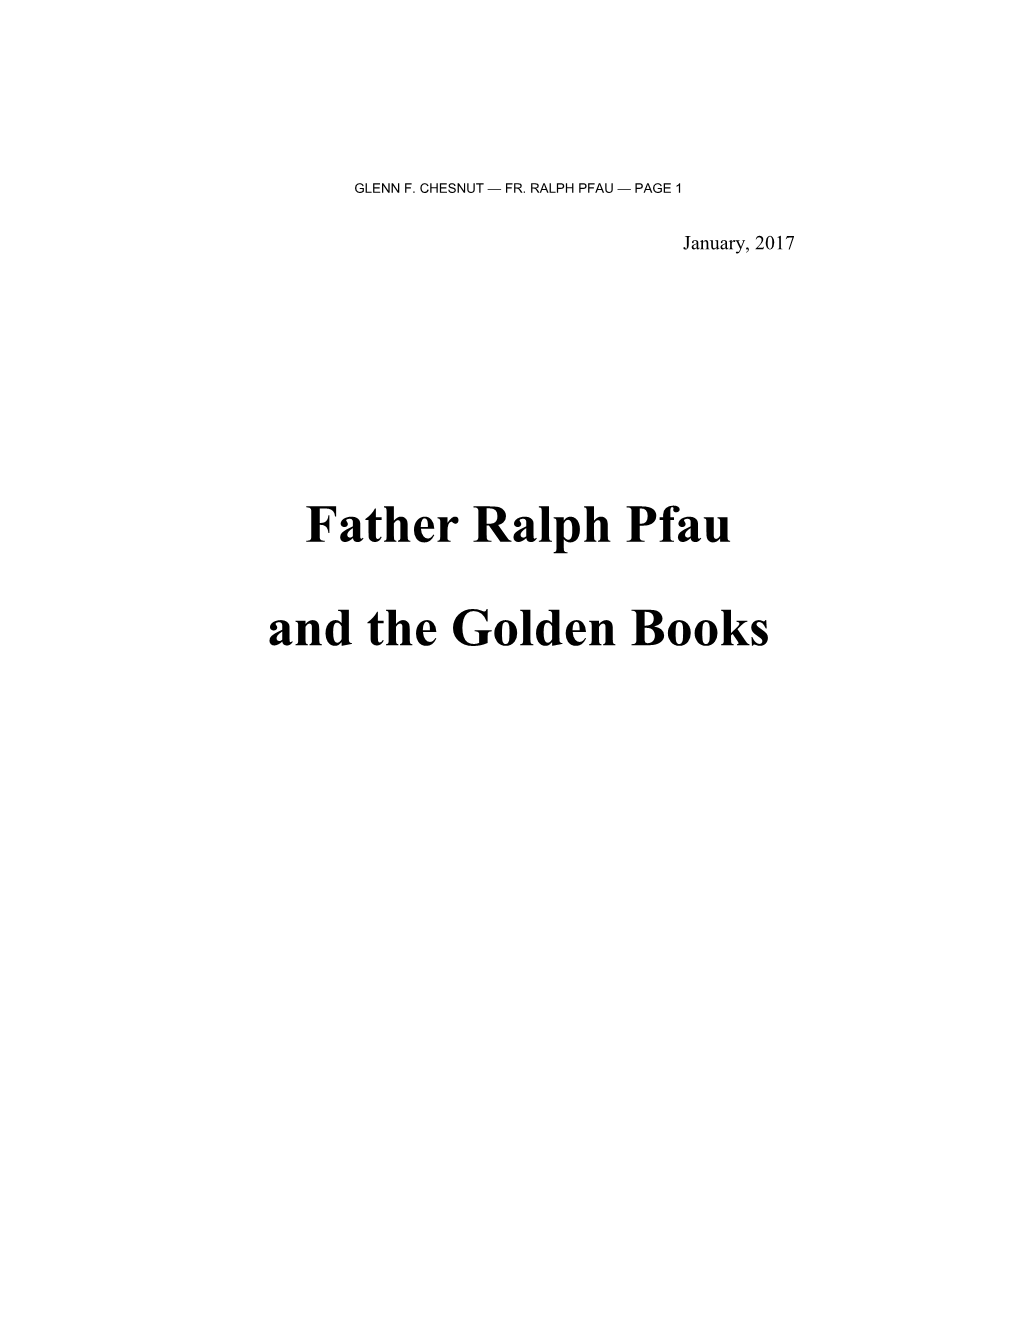 Father Ralph Pfau: Alcoholics Anonymous Author and American Catholic Thinker